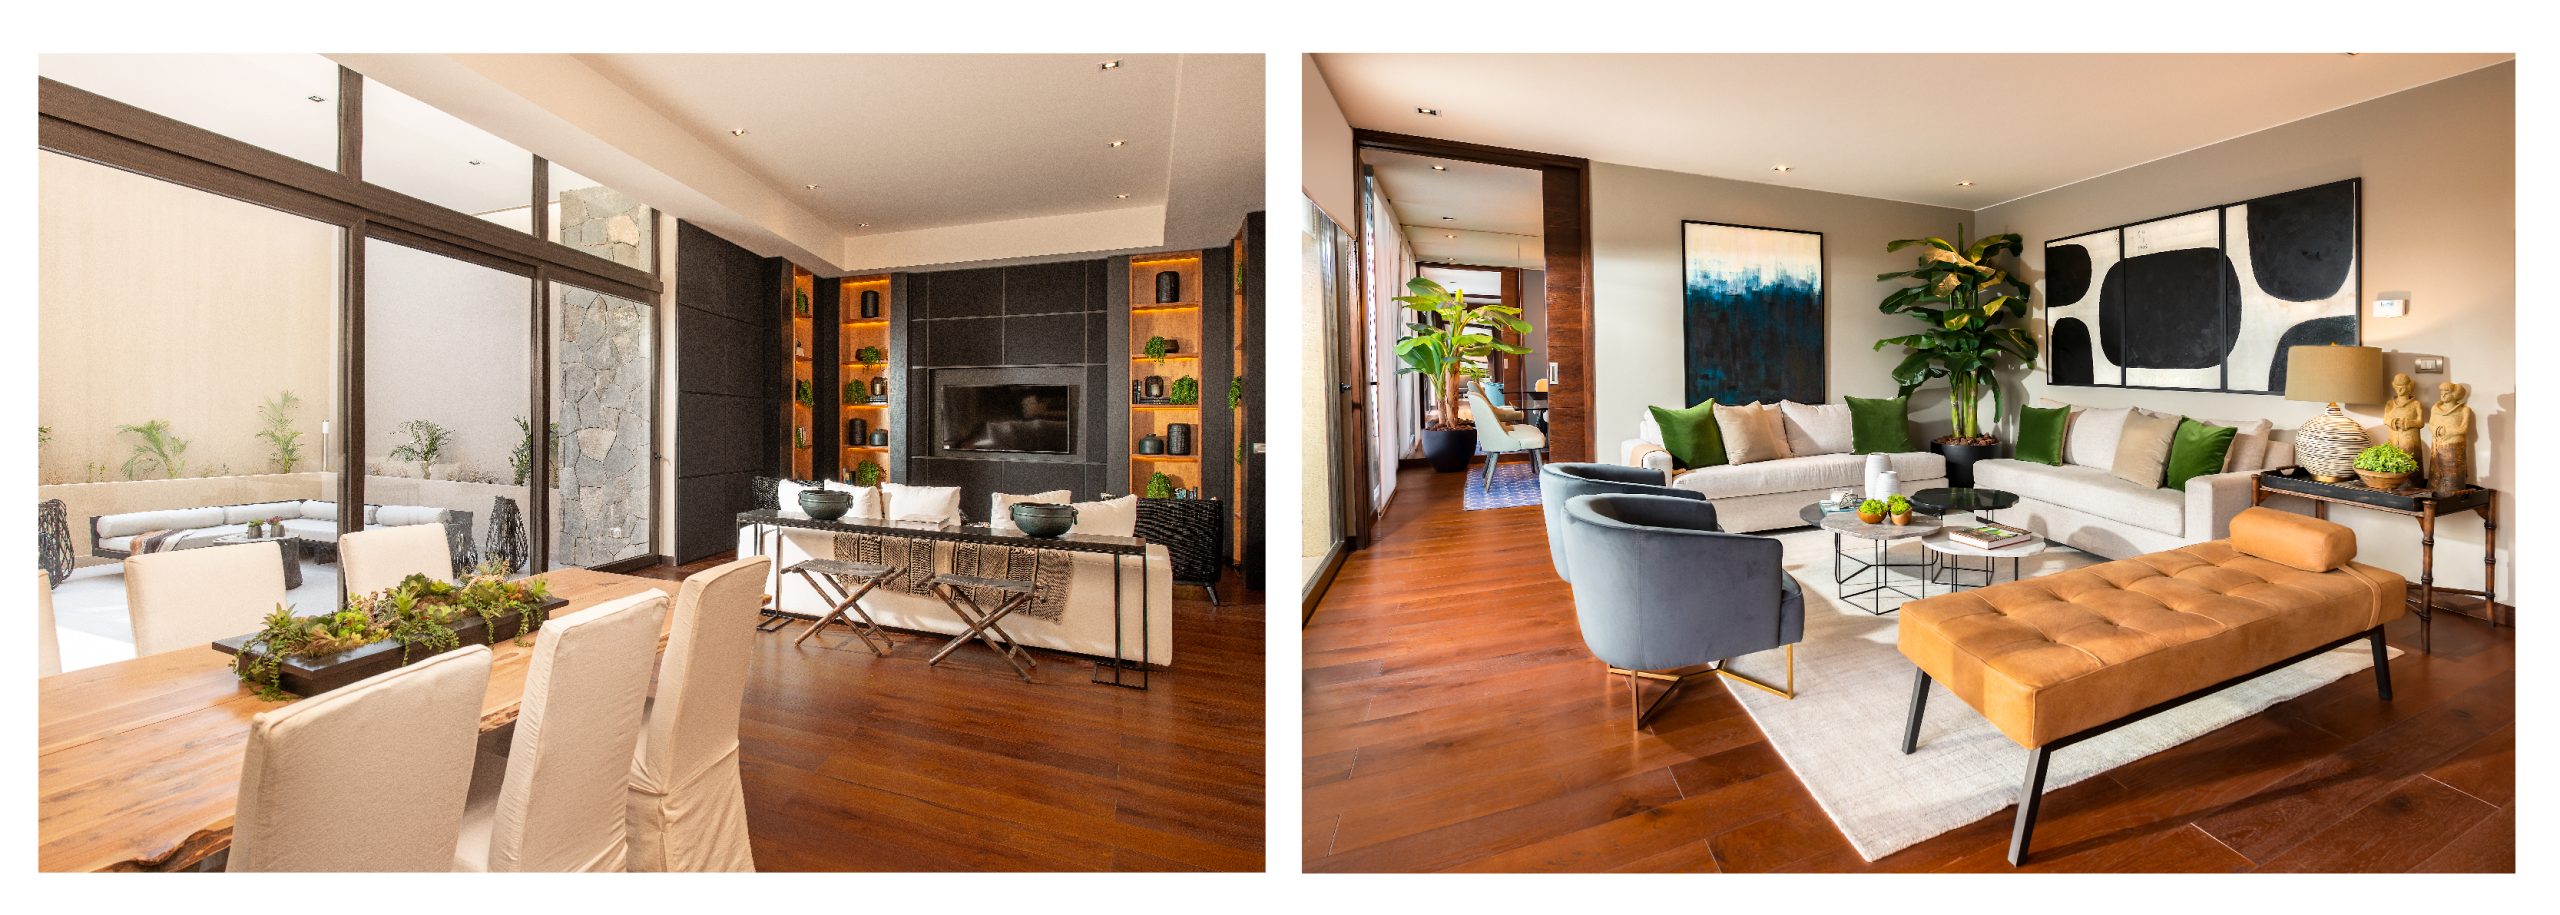 pisos de madera, pisos de ingenieria, piso look madera, proyecto, living, comedor, proyecto moderno 